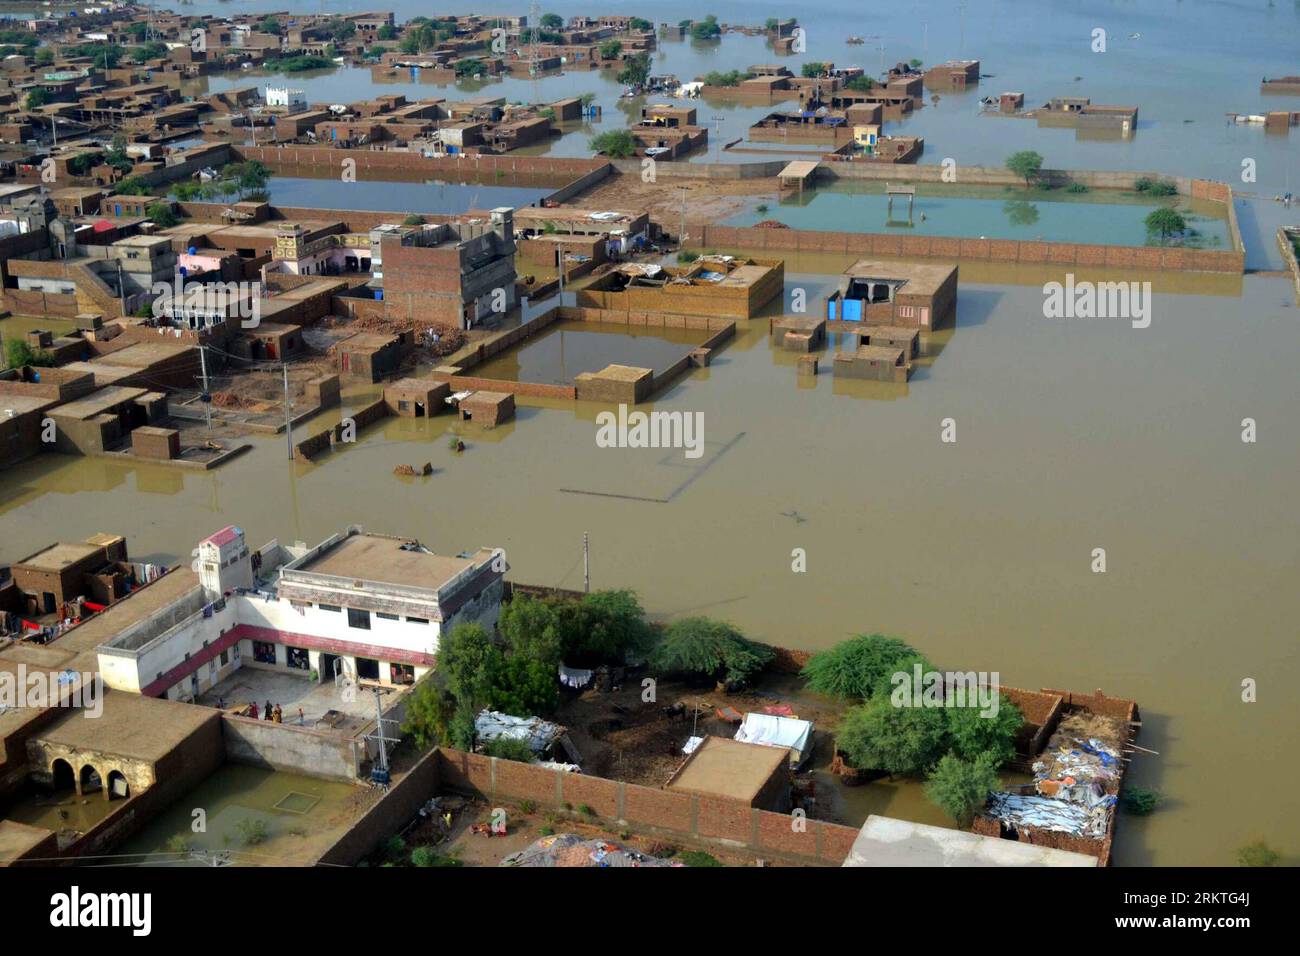 Bildnummer: 58471888  Datum: 14.09.2012  Copyright: imago/Xinhua (120914) -- DERA MURAD JAMALI, Sept. 14, 2012 (Xinhua) -- This Aerial photo taken on Sept. 14, 2012 shows view of the flooded area in Dera Murad Jamali, southwest Pakistan. At least 136 were killed and 182 others were injured in flood triggered by heavy rains across Pakistan from Aug. 22 to Sept. 12, Pakistan National Disaster Management Authority said on Wednesday. (Xinhua/Iqbal Hussain) PAKISTAN-DERA MURAD JAMALI-FLOOD PUBLICATIONxNOTxINxCHN Gesellschaft Flut Überschwemmungen Wetter premiumd x0x xmb 2012 quer      58471888 Date Stock Photo